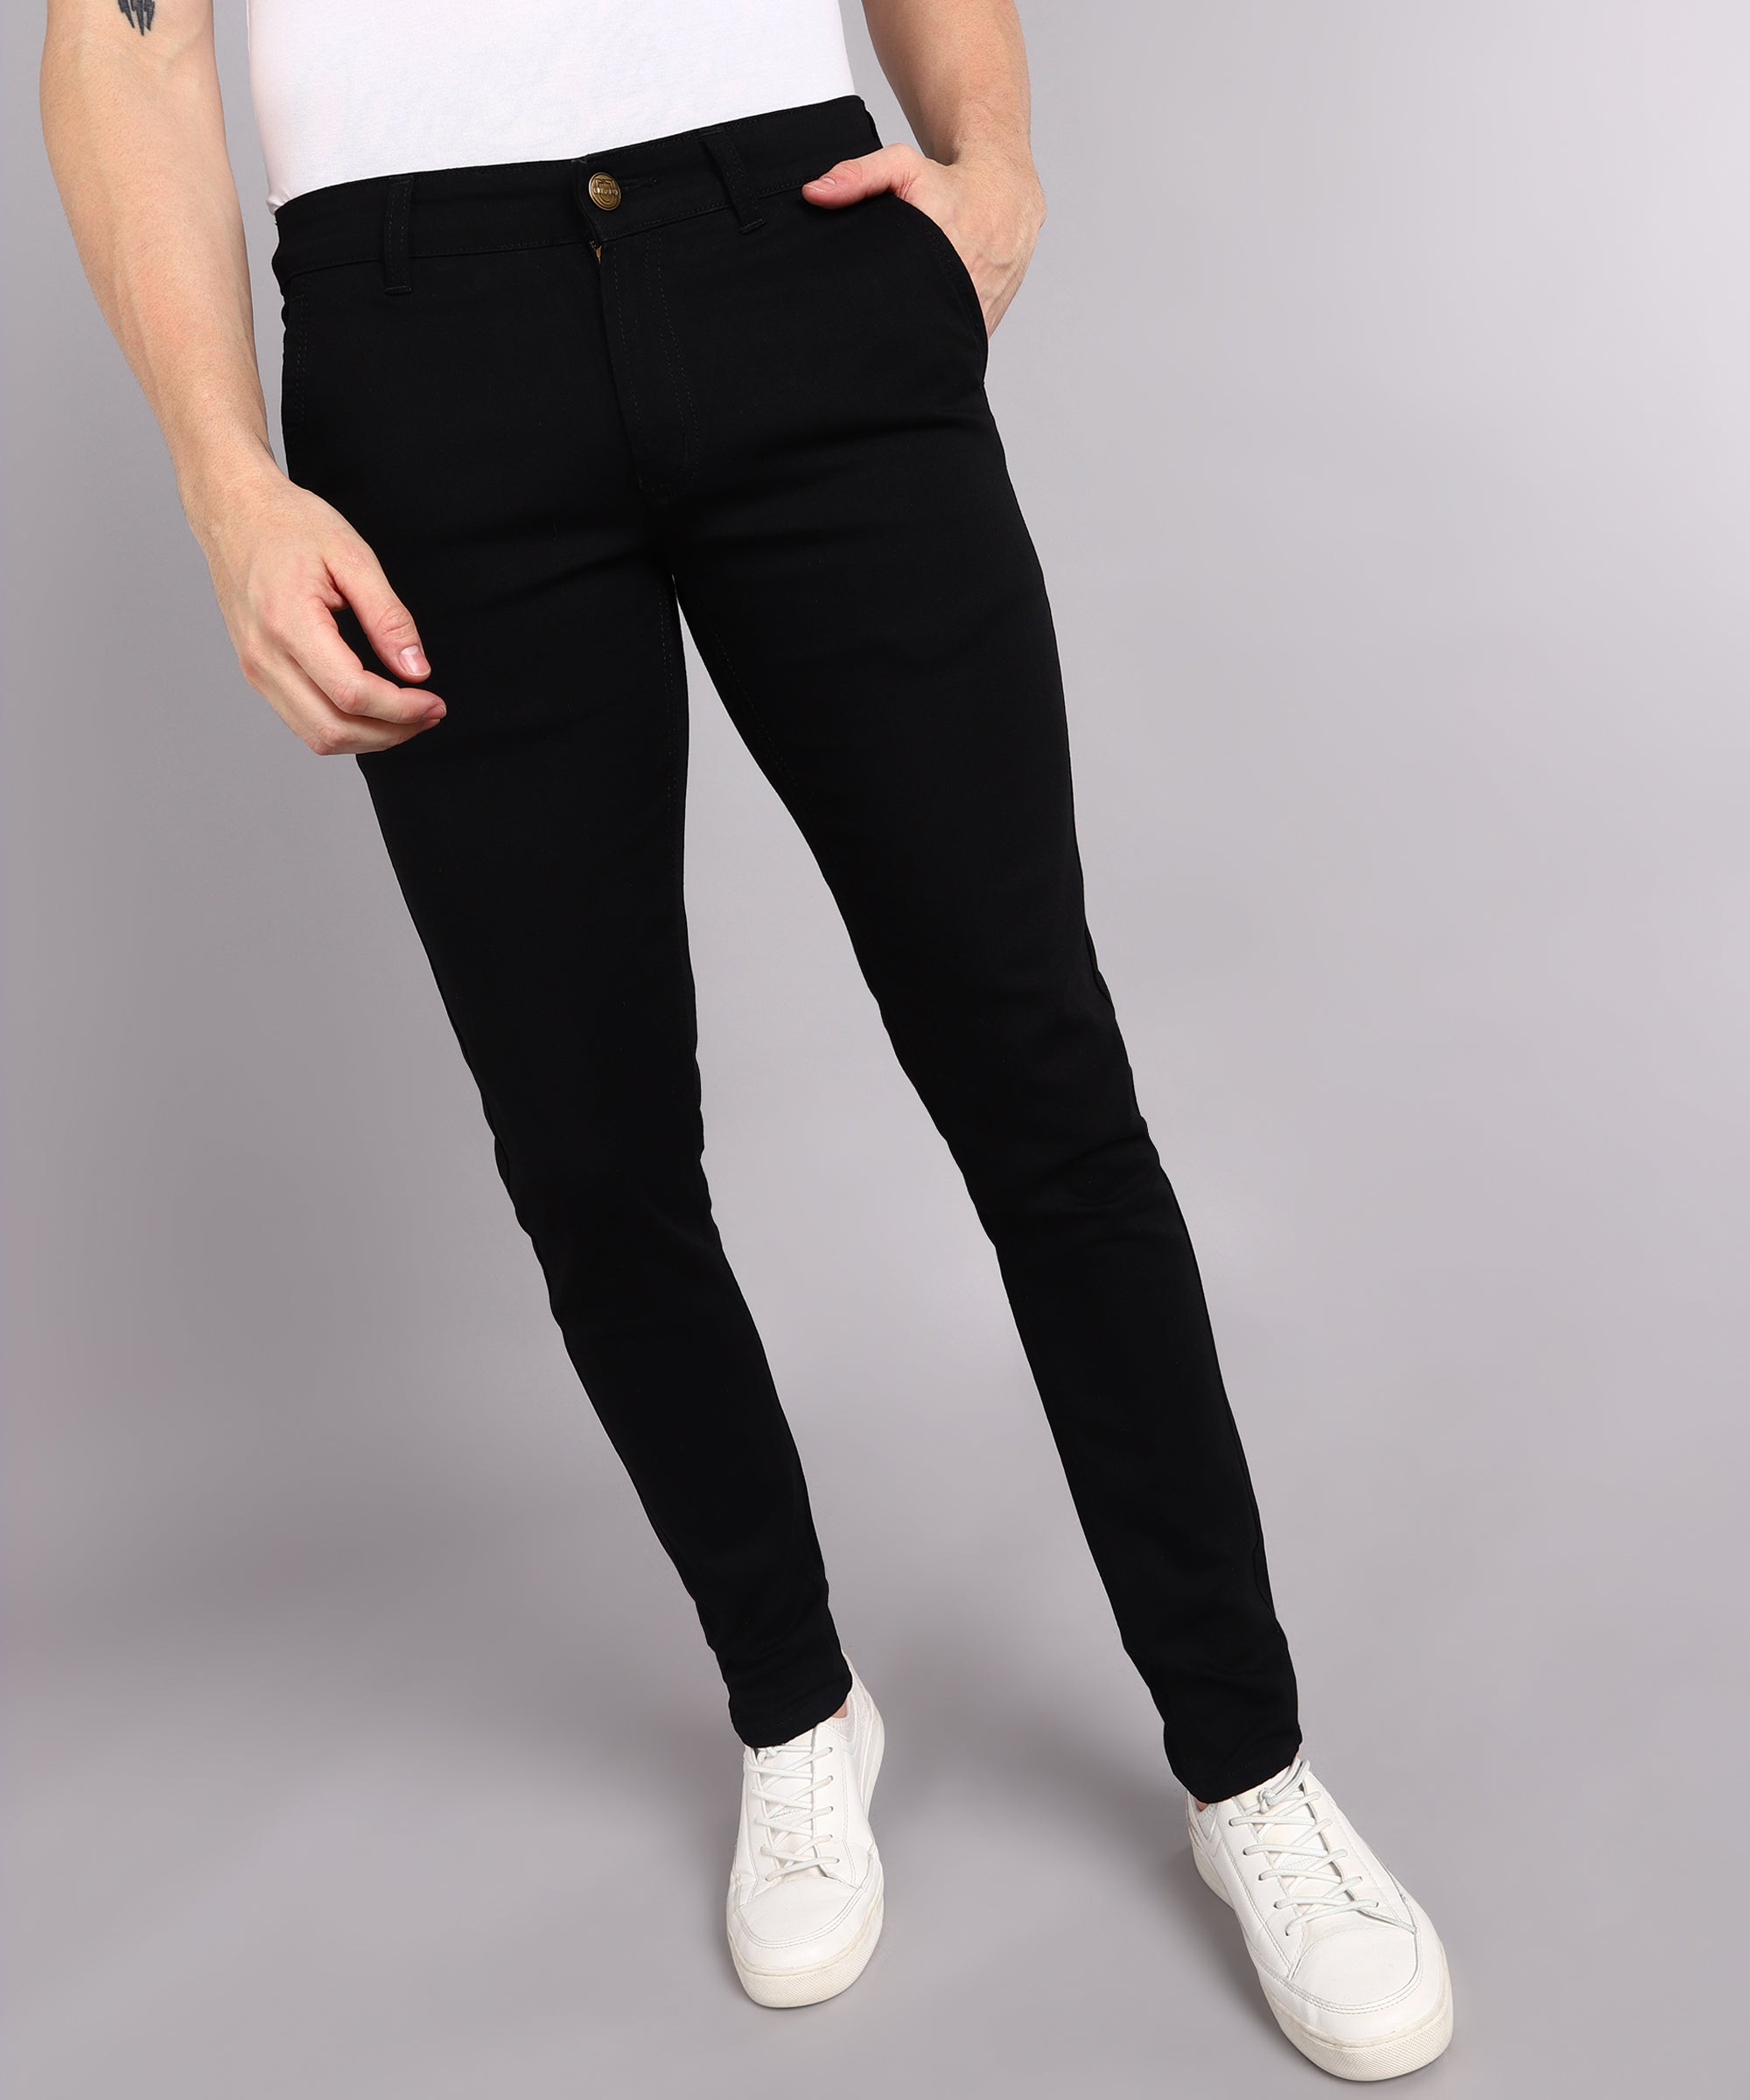 Urbano Fashion Men's Black Slim Fit Denim Jeans Stretchable